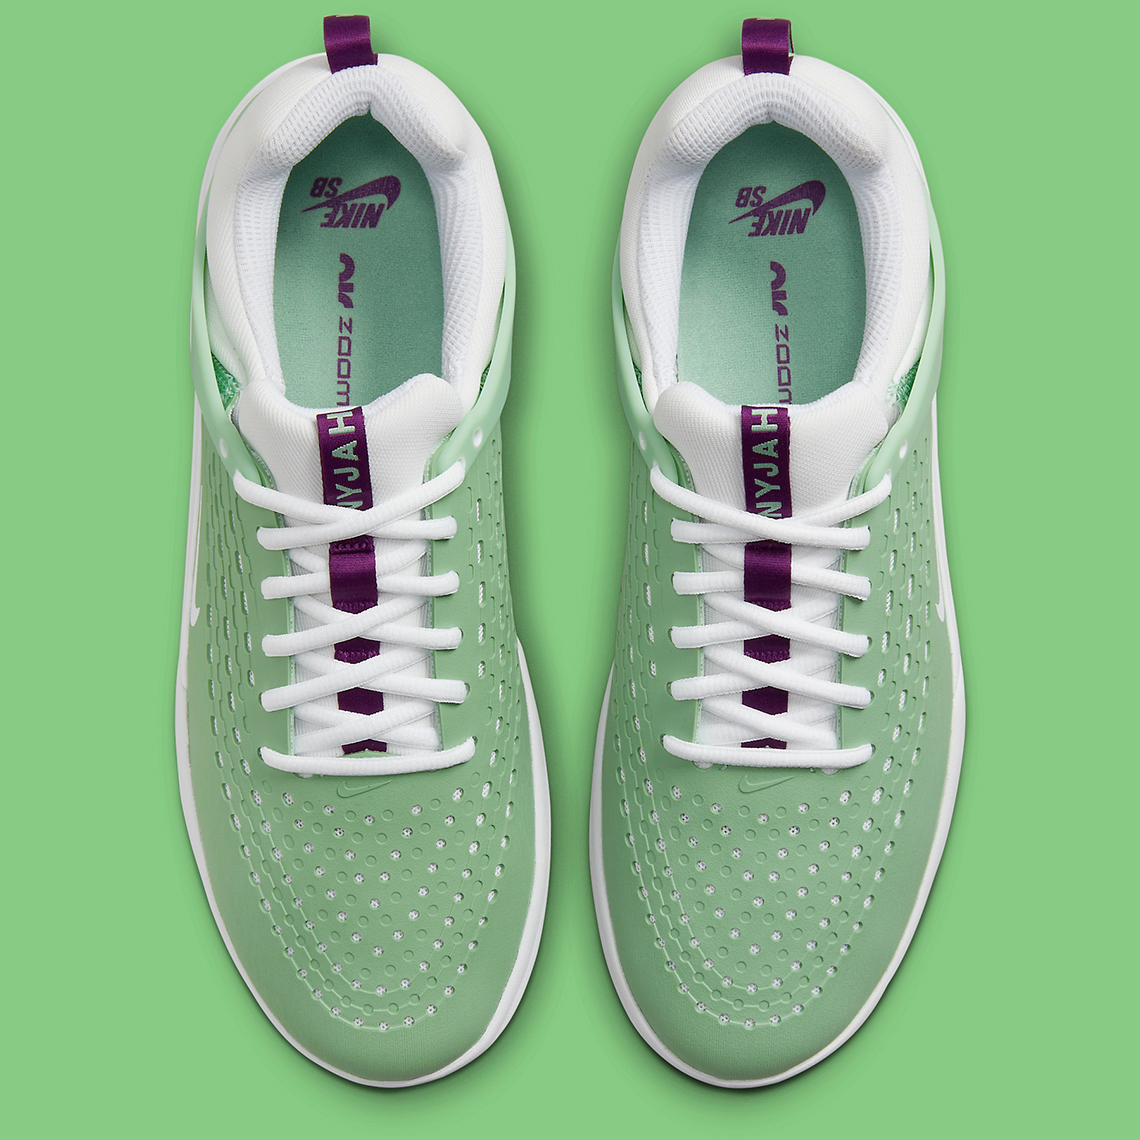 Nike nyjah huston skate shoes SB Nyjah 3 Skate Shoe DJ6130-300 Release Date | SneakerNews.com